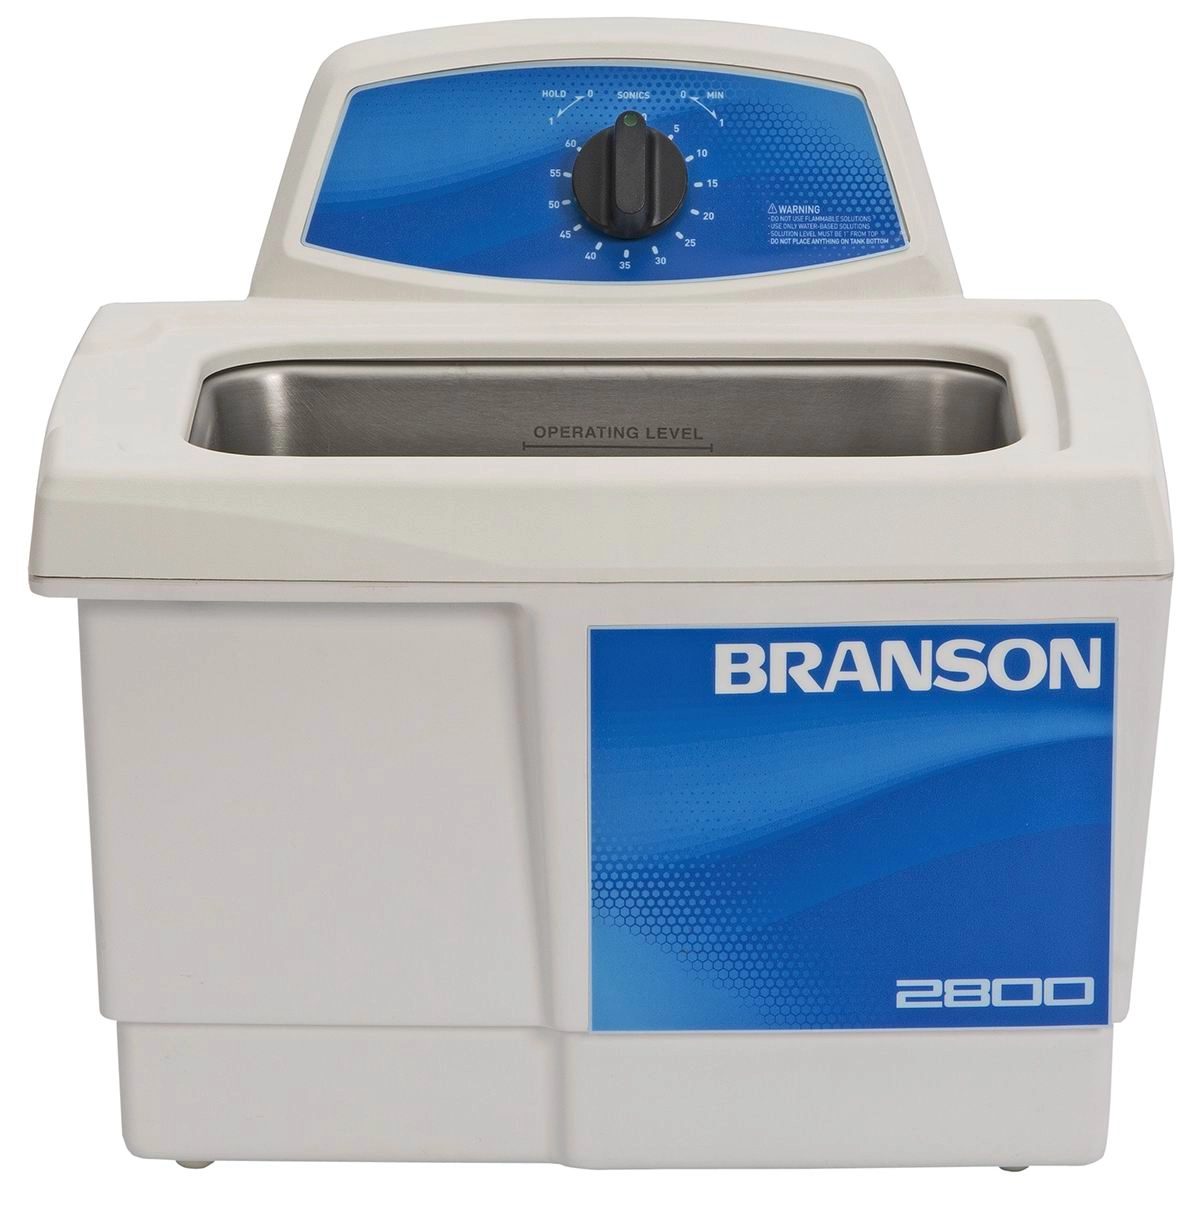 Branson M2800 Ultrasonic Cleaner